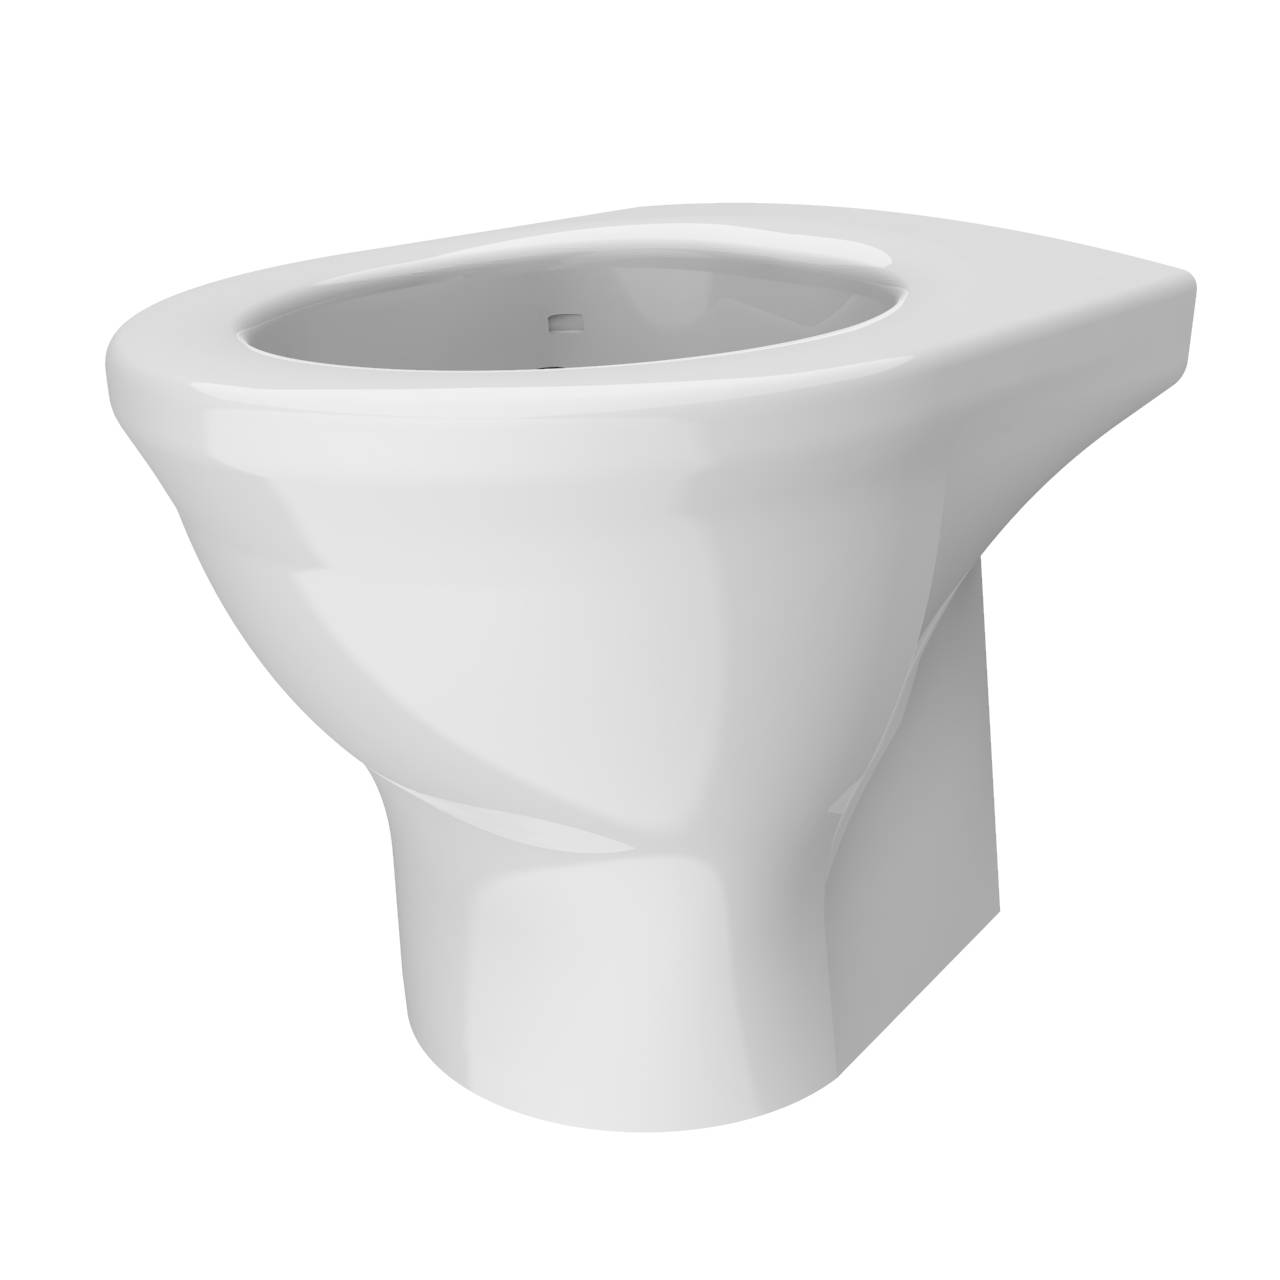 Resan® WC Pan - Standard Height - Floor Fixed [V2]